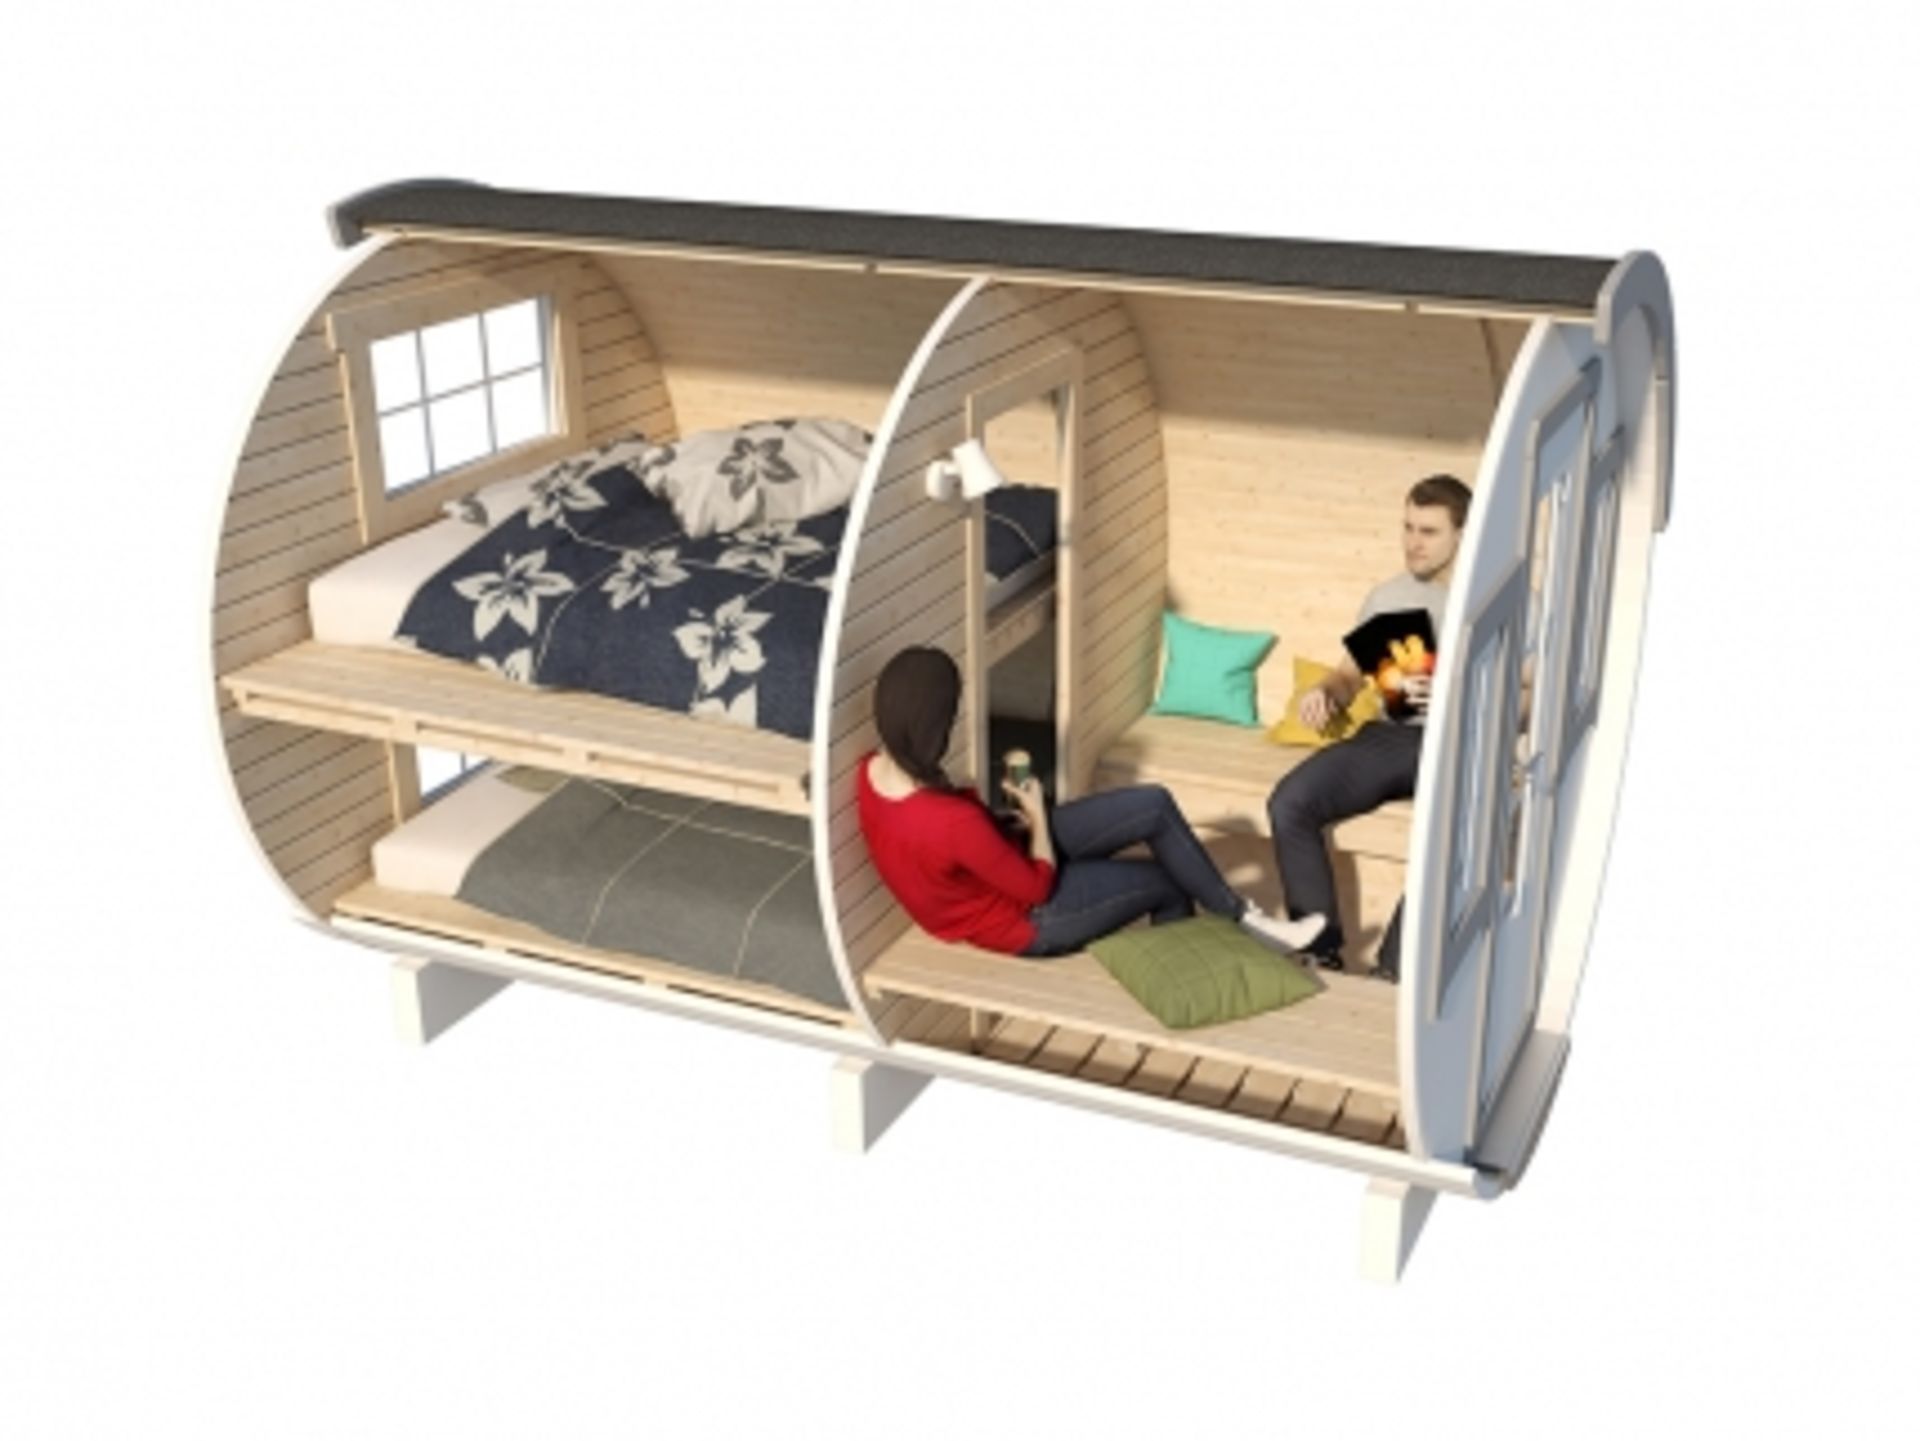 + VAT Brand New 2.2 x 3.3m Barrel For Sleeping - Sleeping & Sitting Rooms Inside - Sleeping Room - Image 3 of 4